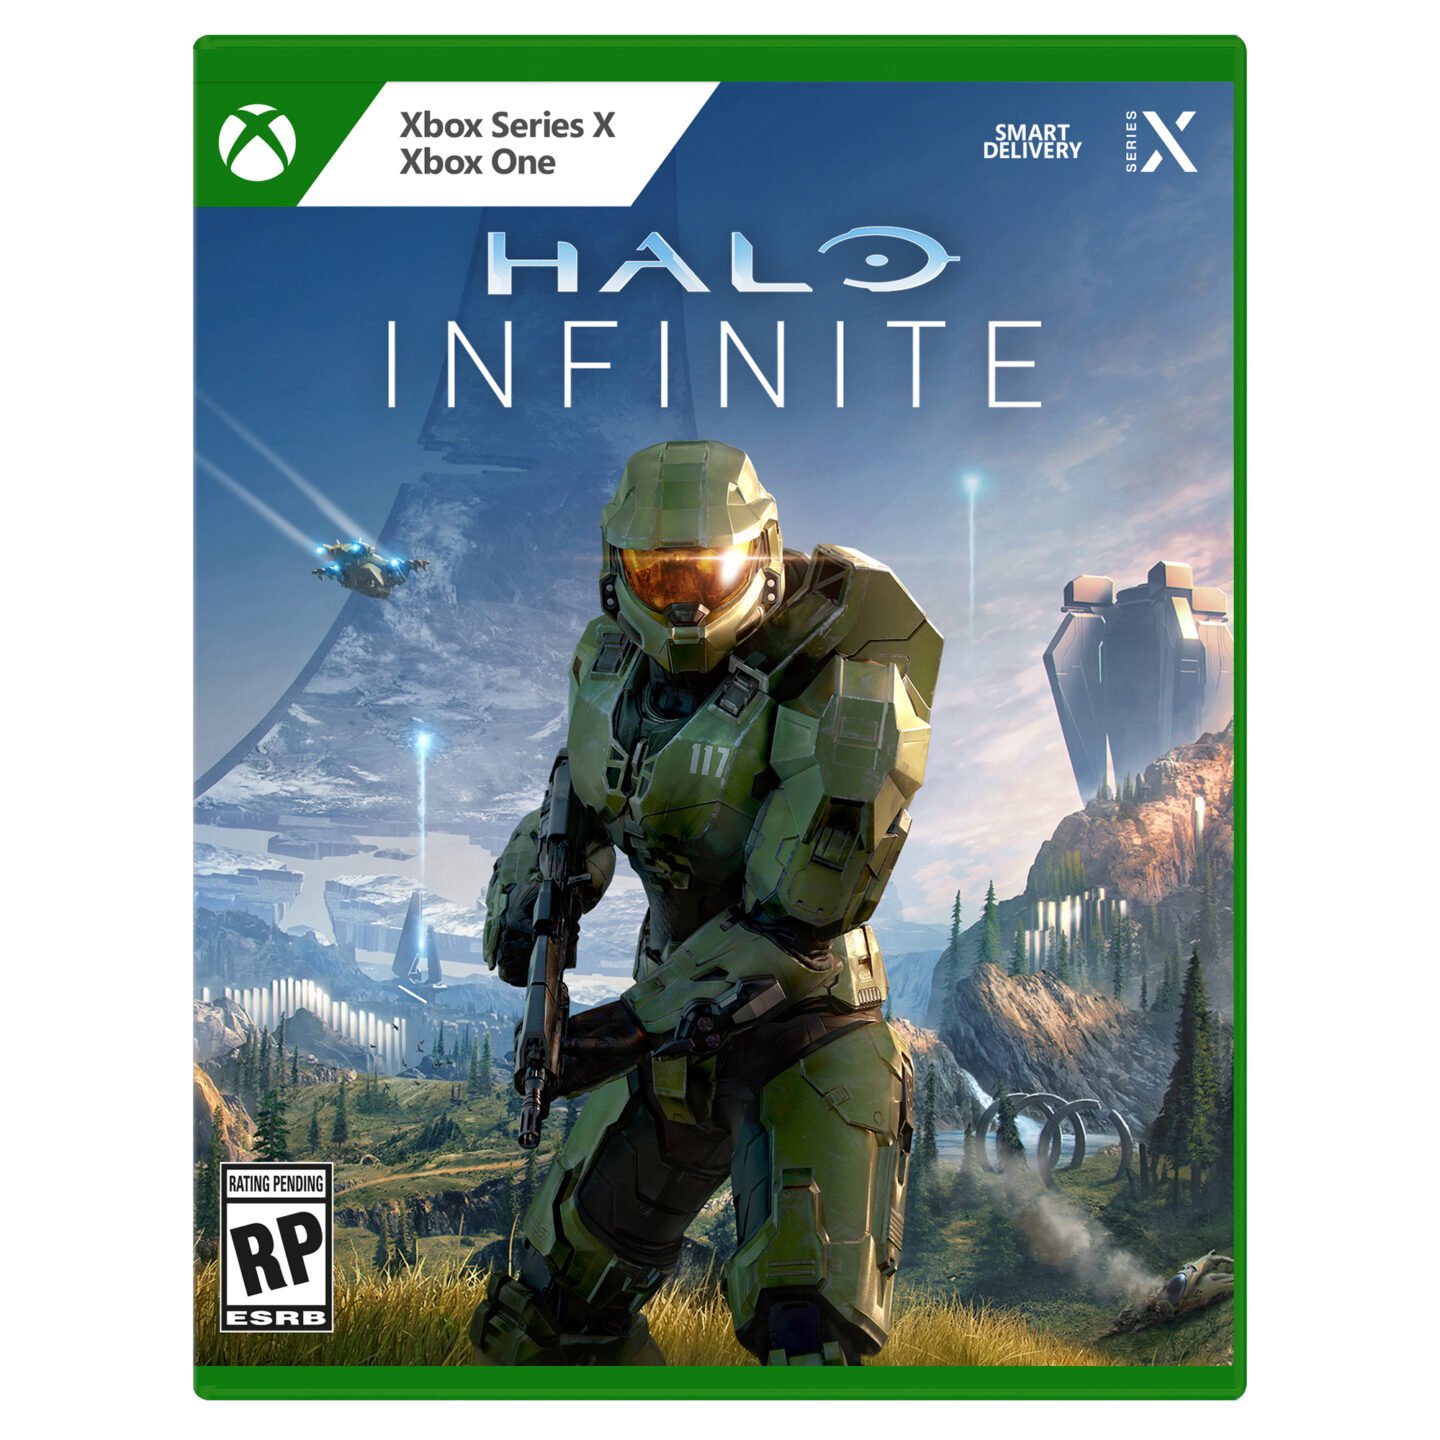 Halo-Infinite-Best-Buy-listing-1440x1440.jpg